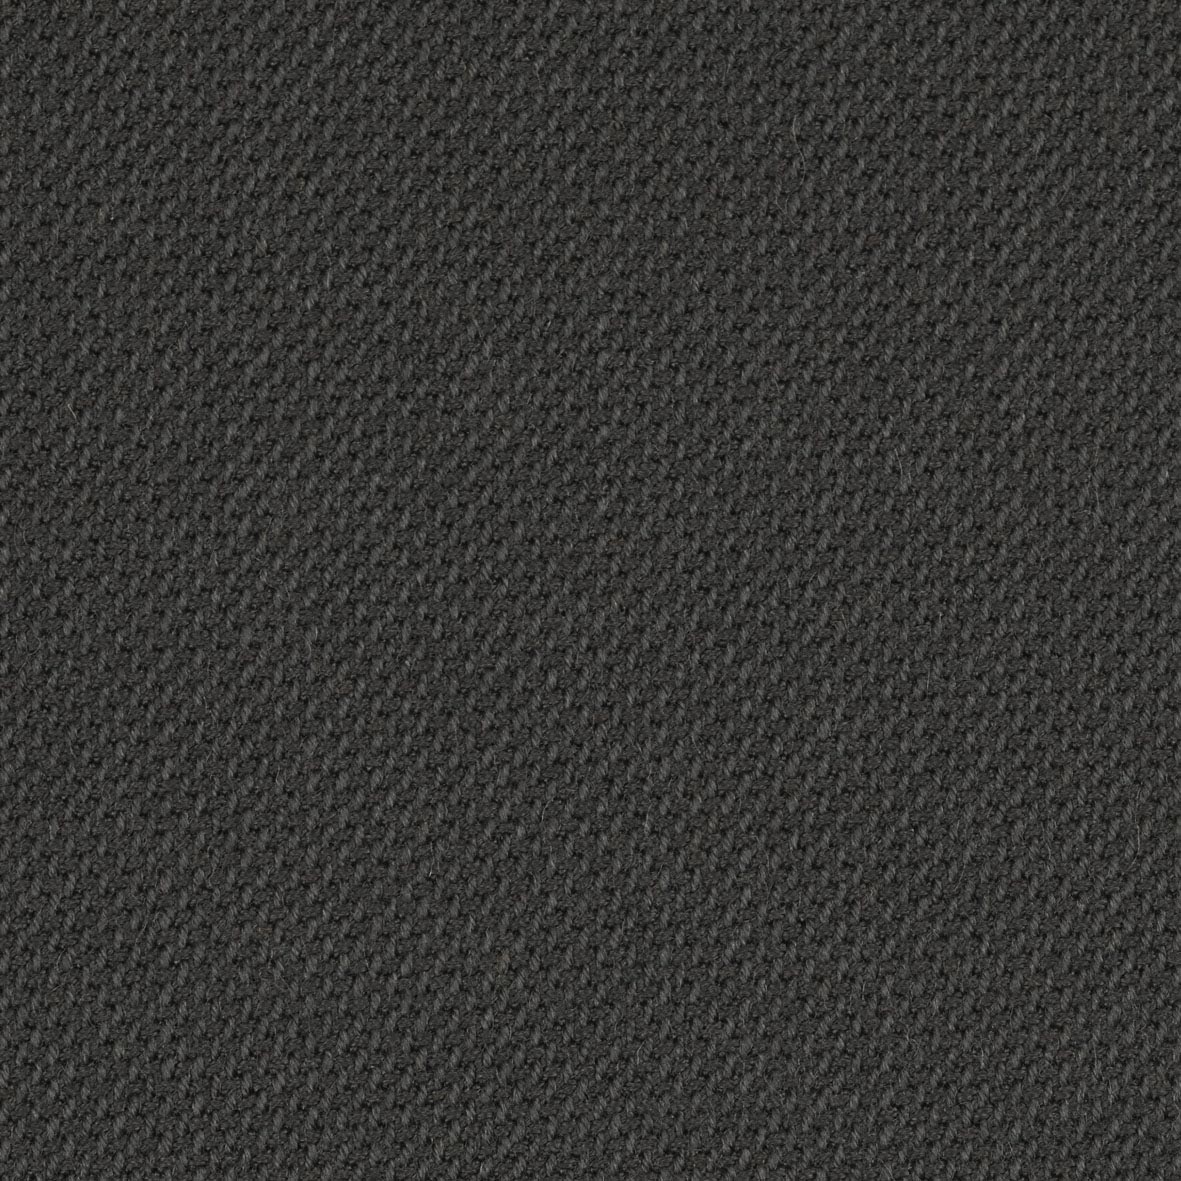 Office chair RH Mereo 220, dark gray fabric upholstery, black